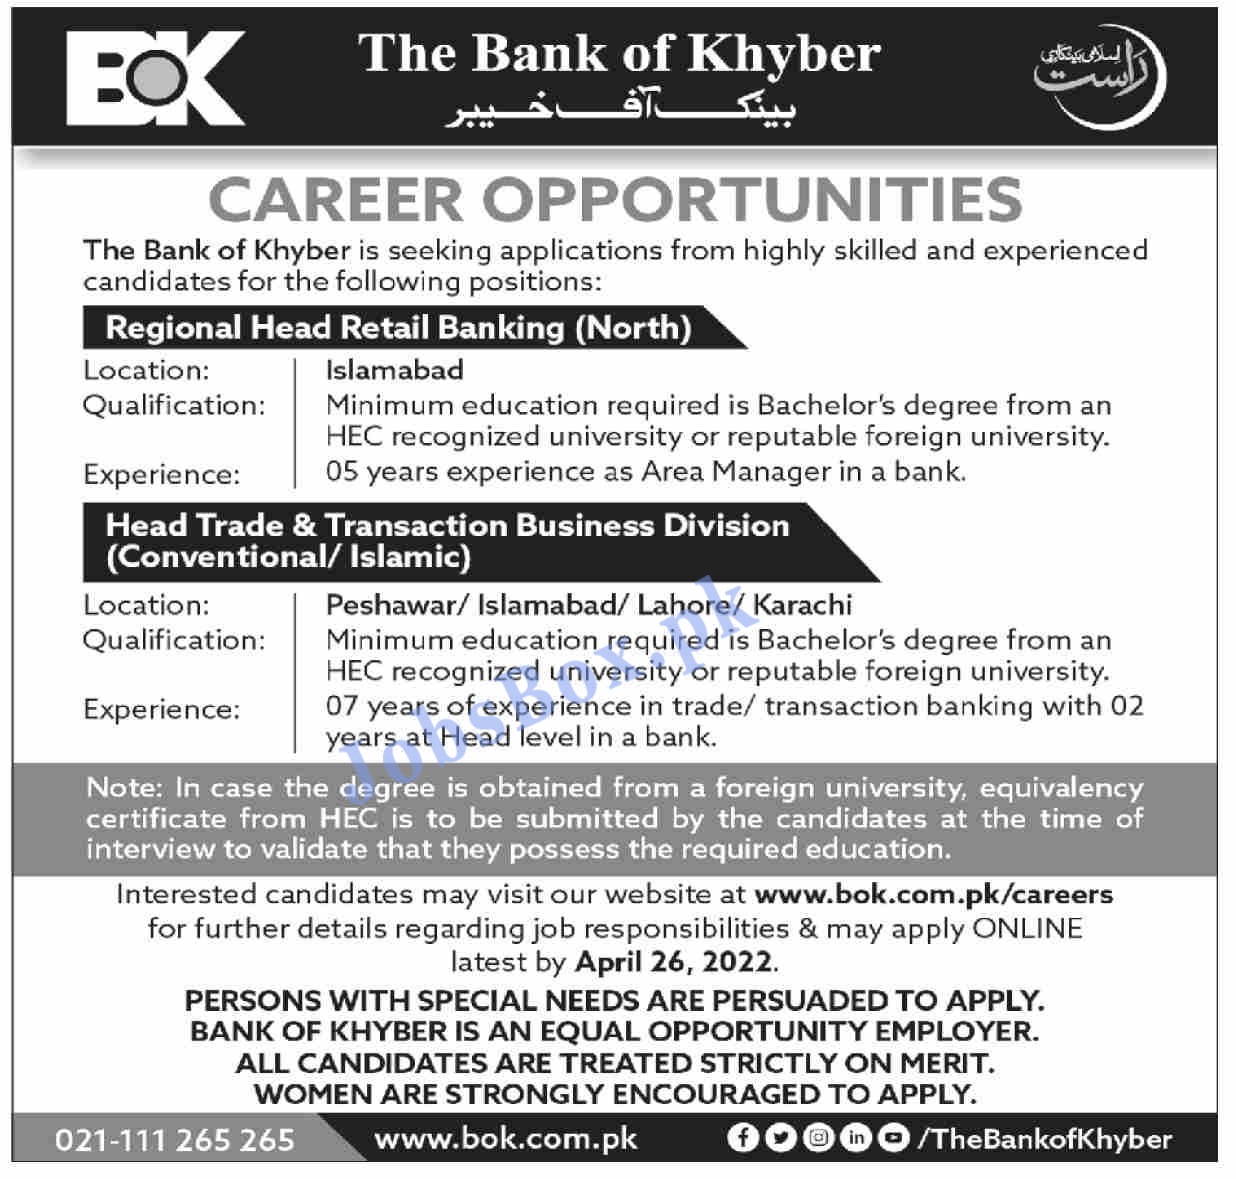 Bank of Khyber BOK Jobs 2022 Online Form Download – www.bok.com.pk